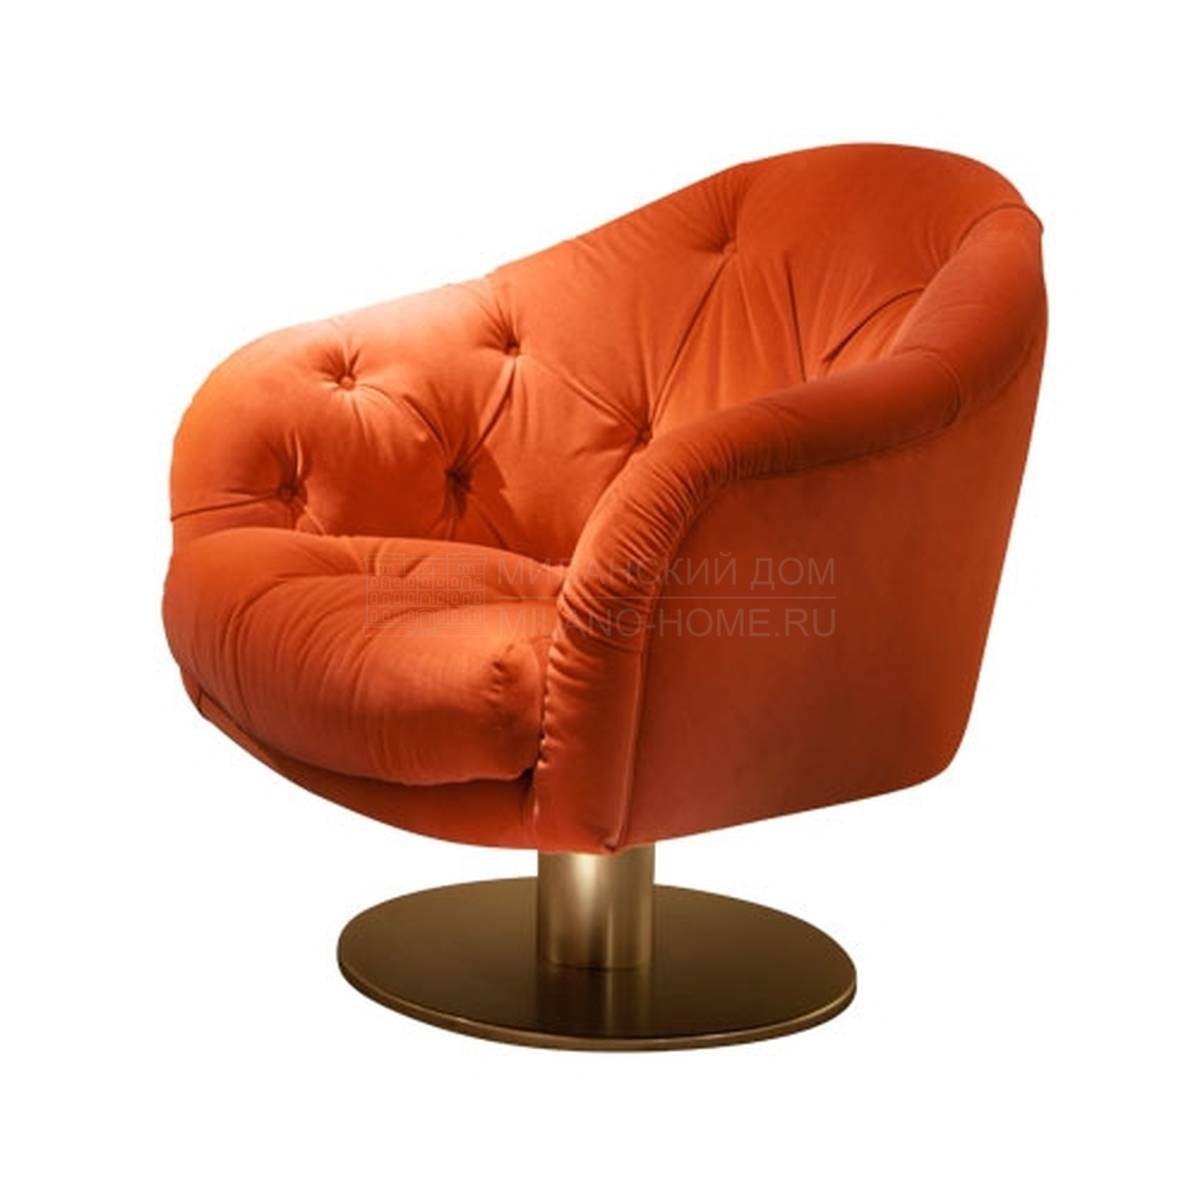 Кресло Garbo/ chair из Италии фабрики SOFTHOUSE